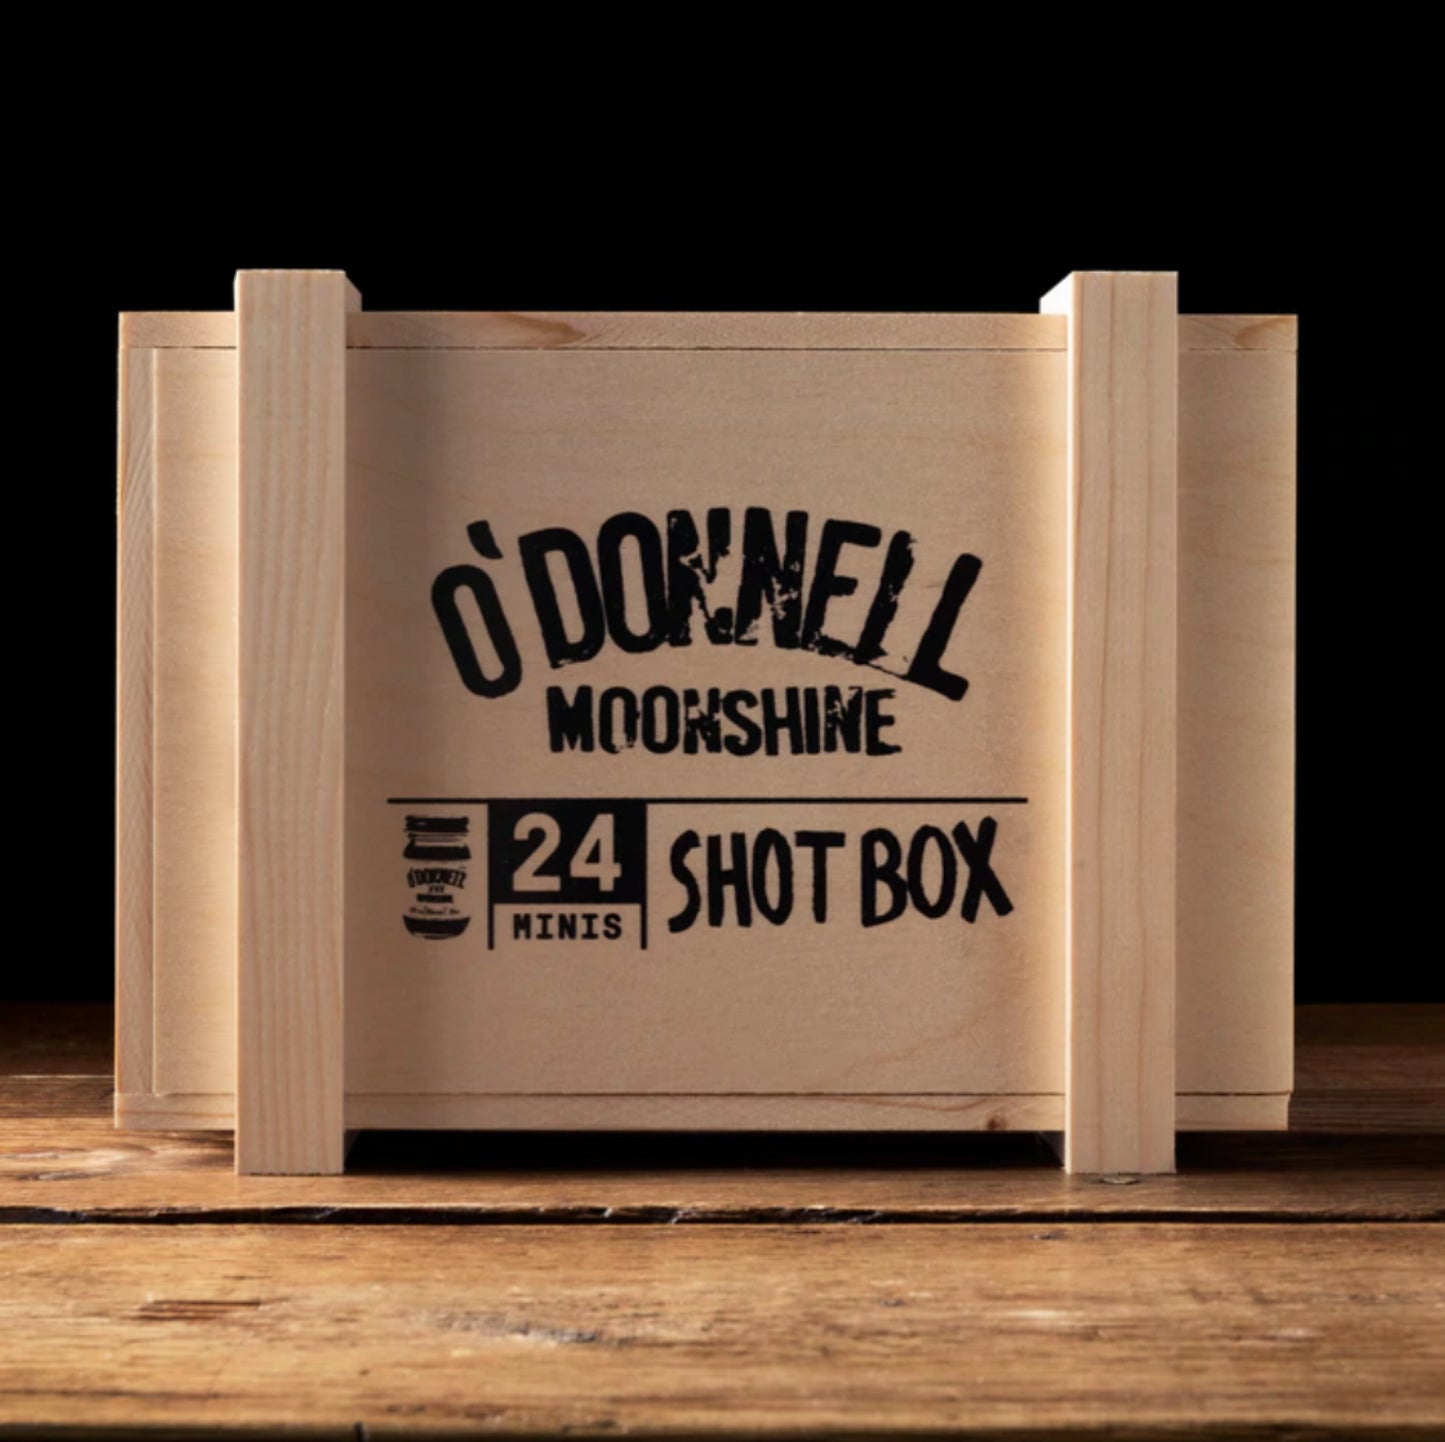 O'Donnell Moonshine shot box set of 24 minis packaging shot